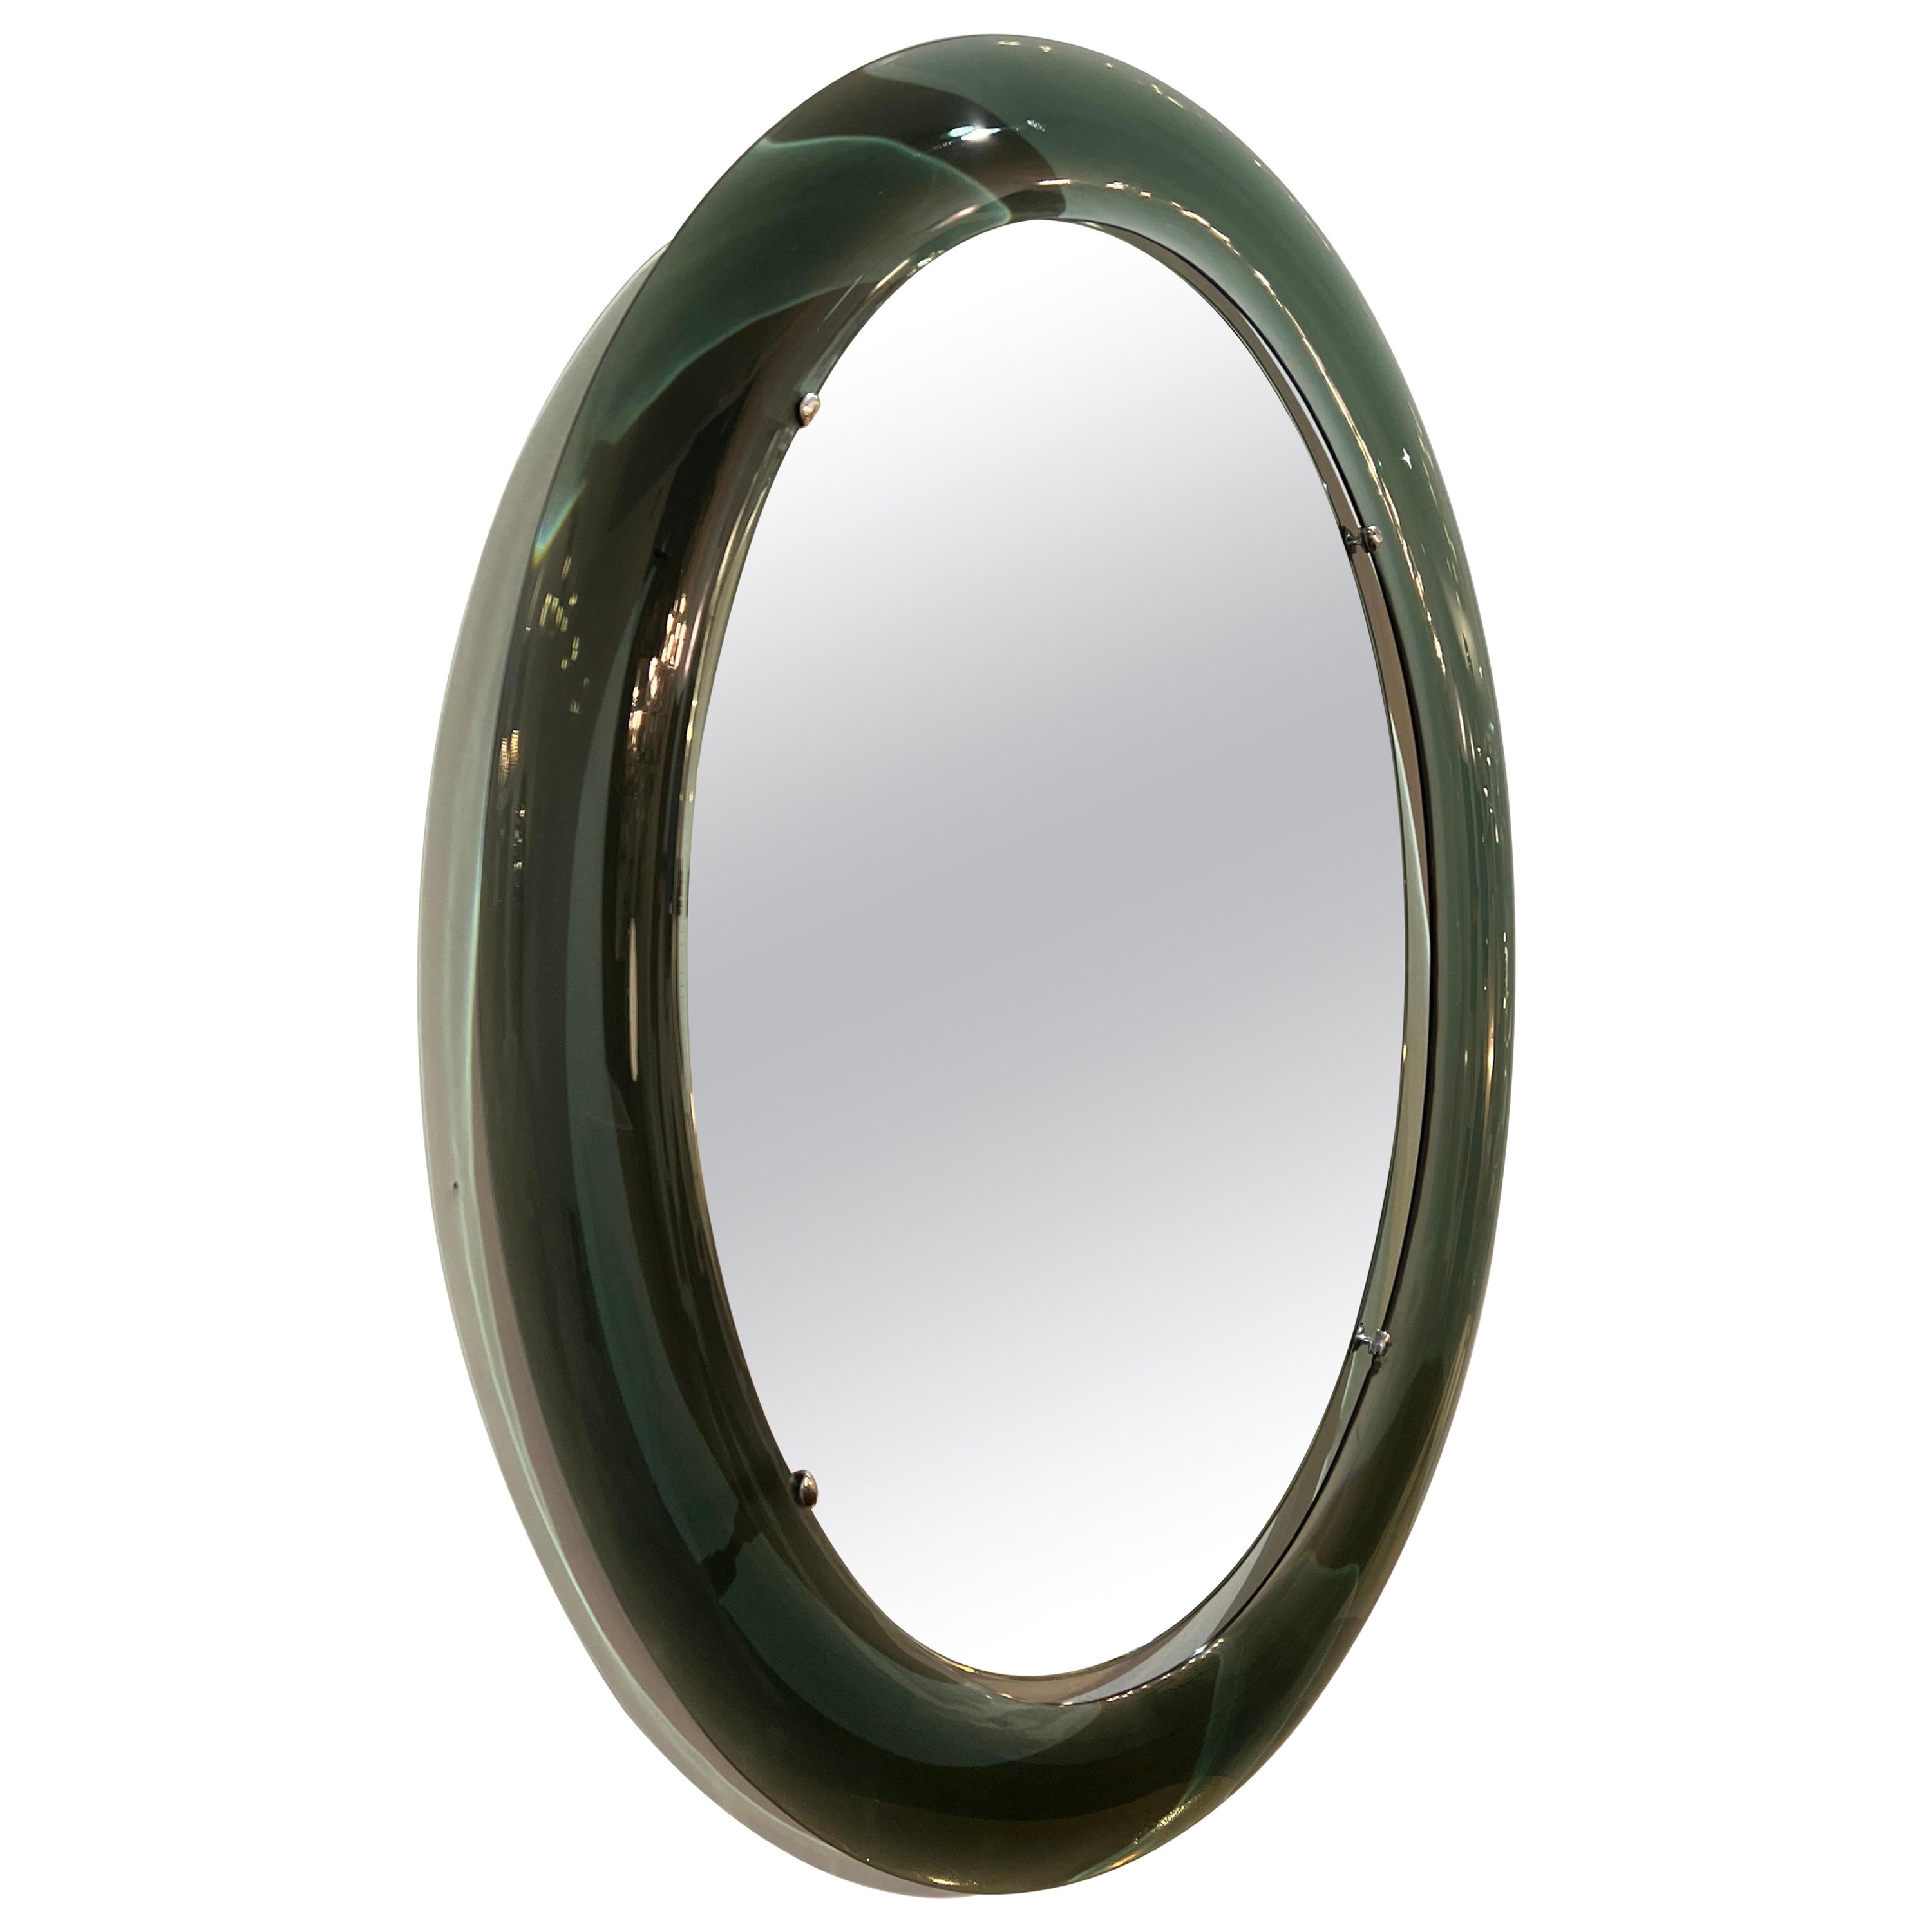 1960s Italian Large Oval Glass Framed Wall Mirror